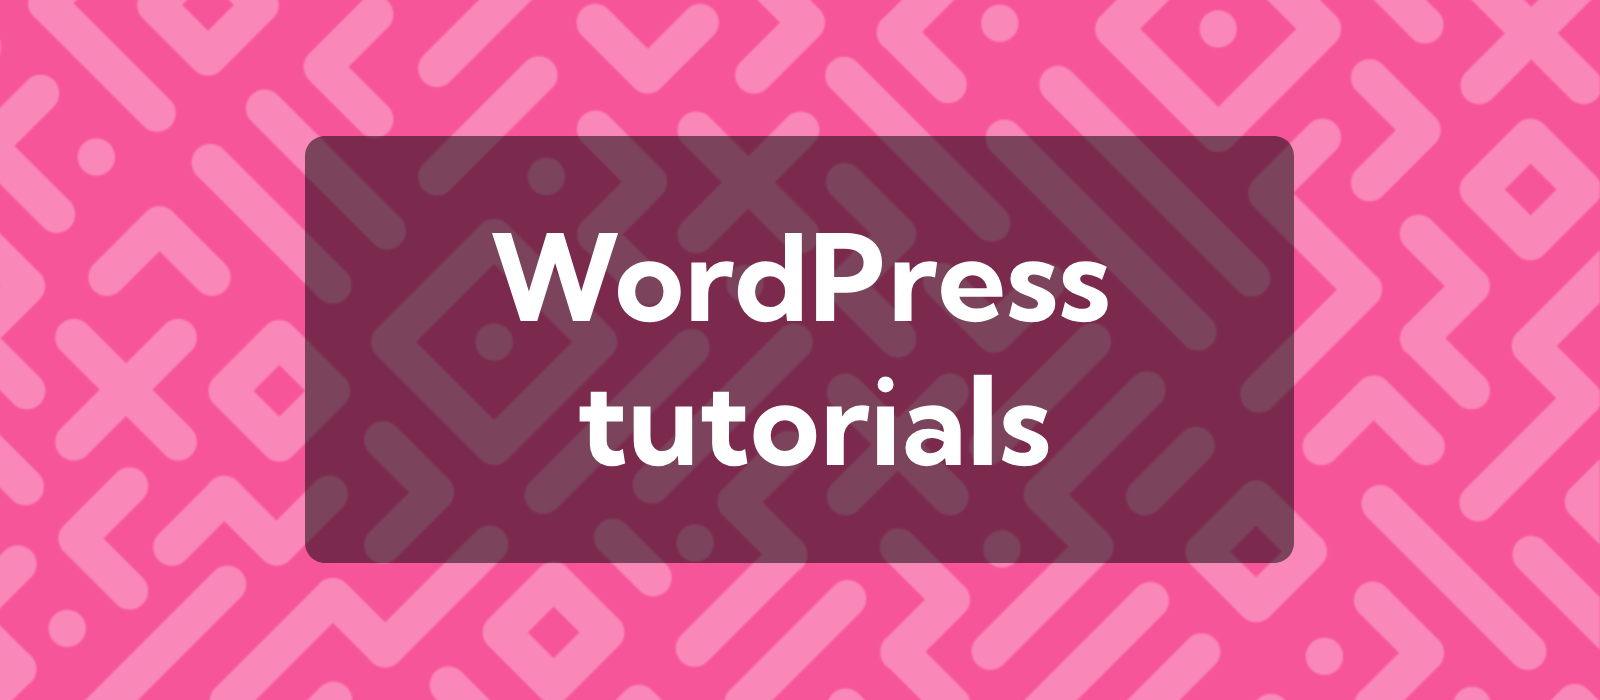 WordPress tutorials cover